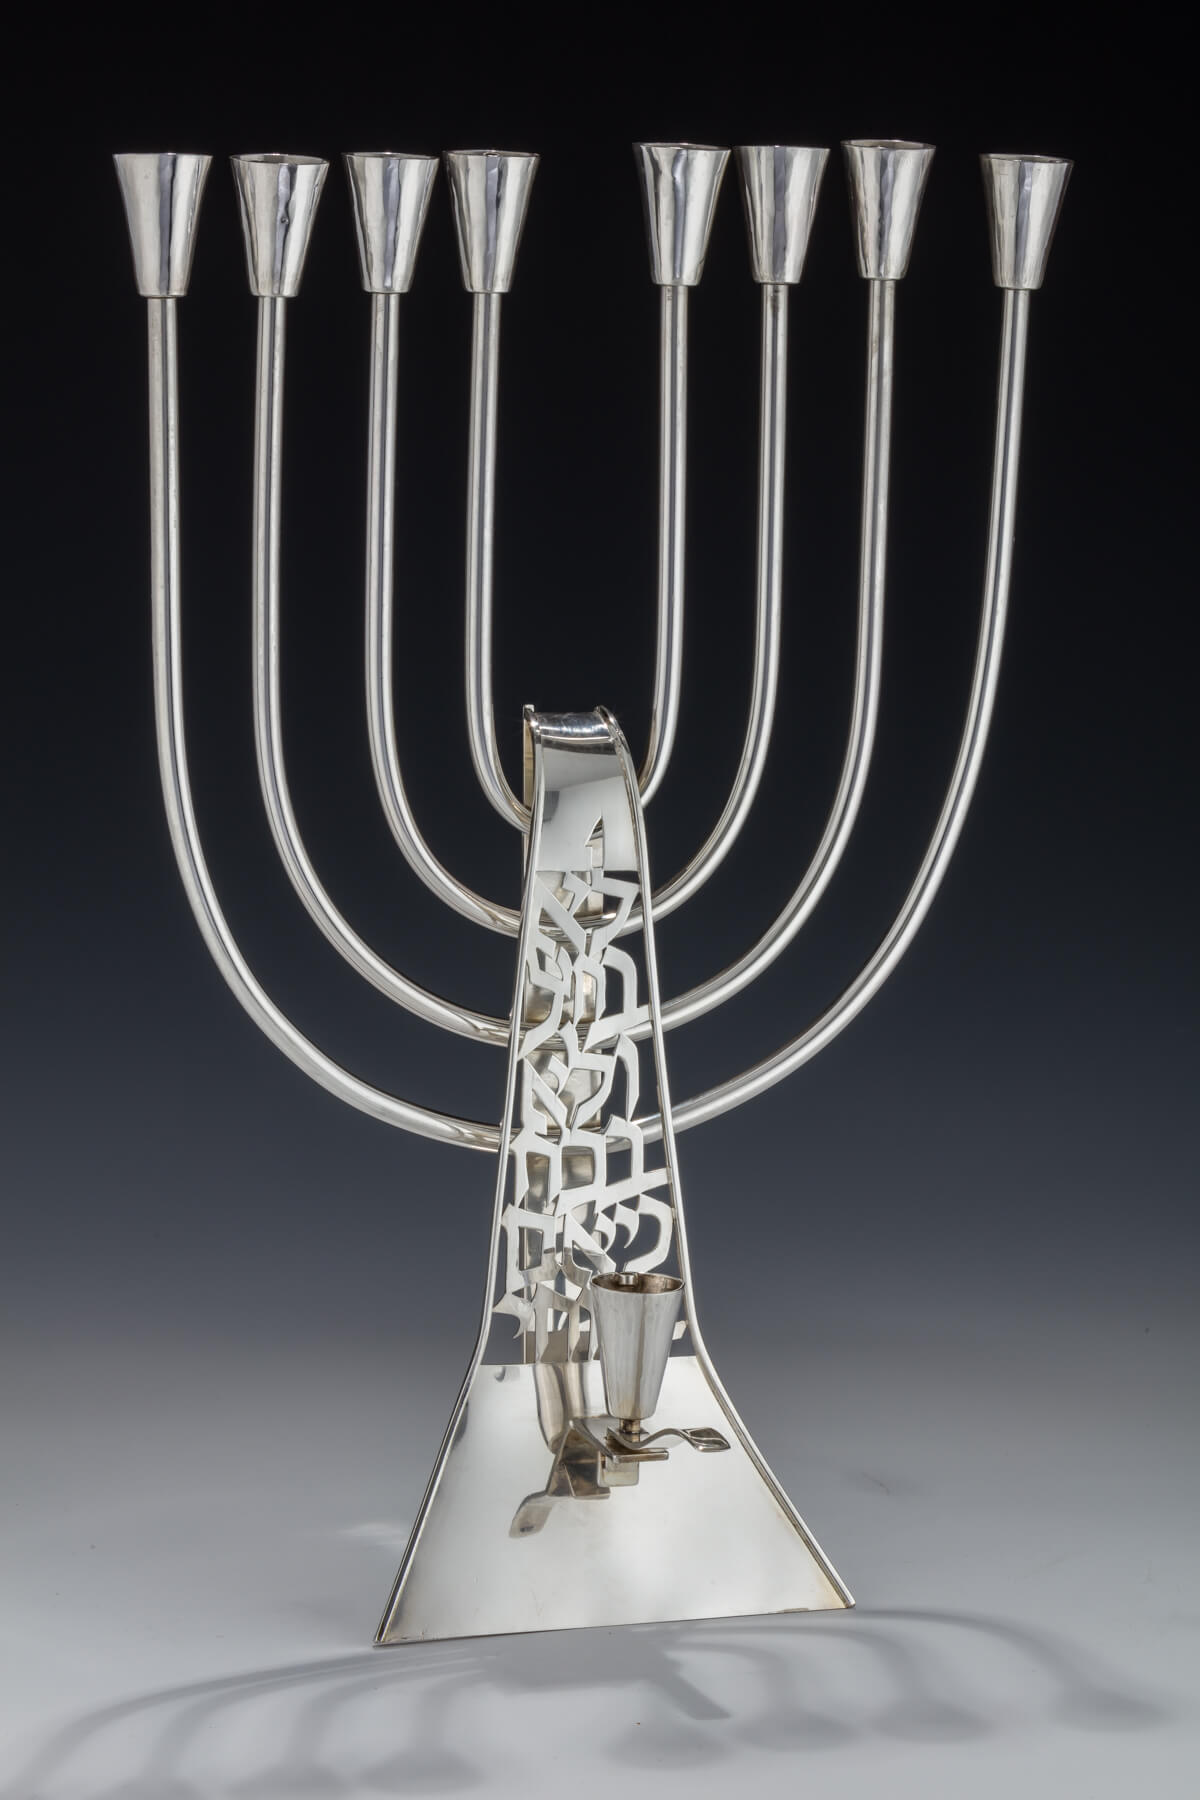 121. Large Sterling Silver Chanukah Menorah by David Gumbel